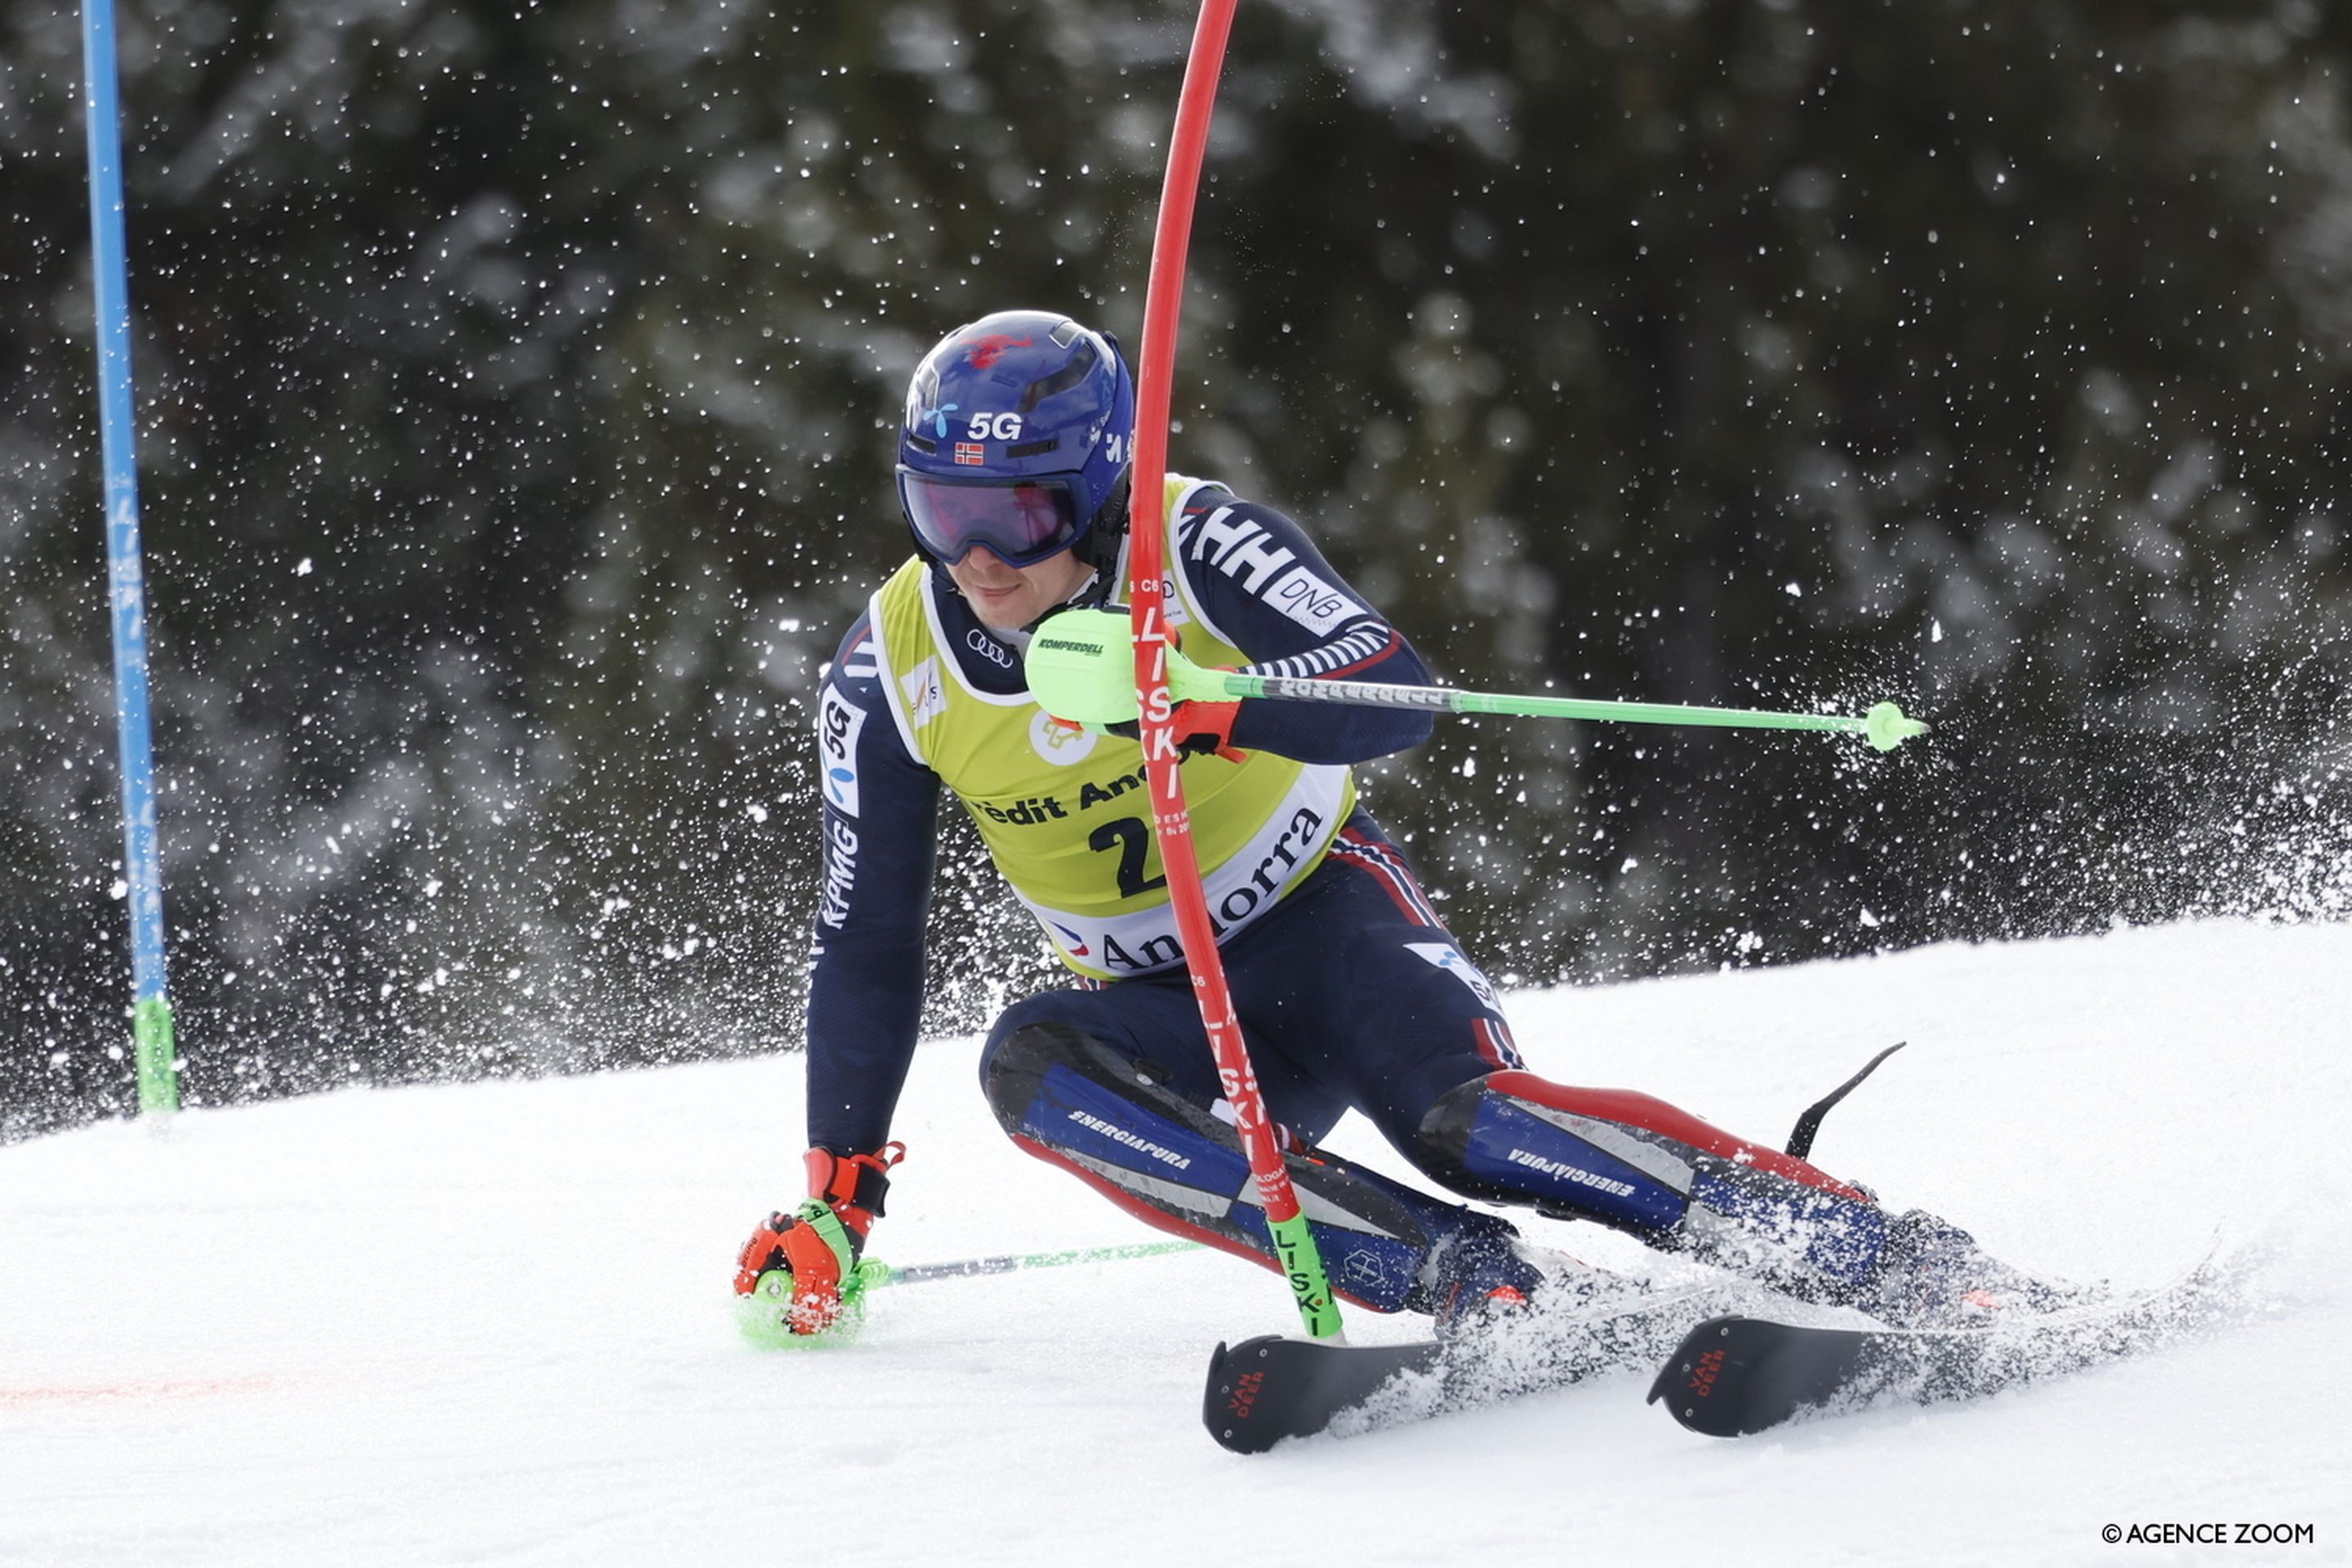 Can Kristoffersen regain the slalom or giant slalom globe this season?